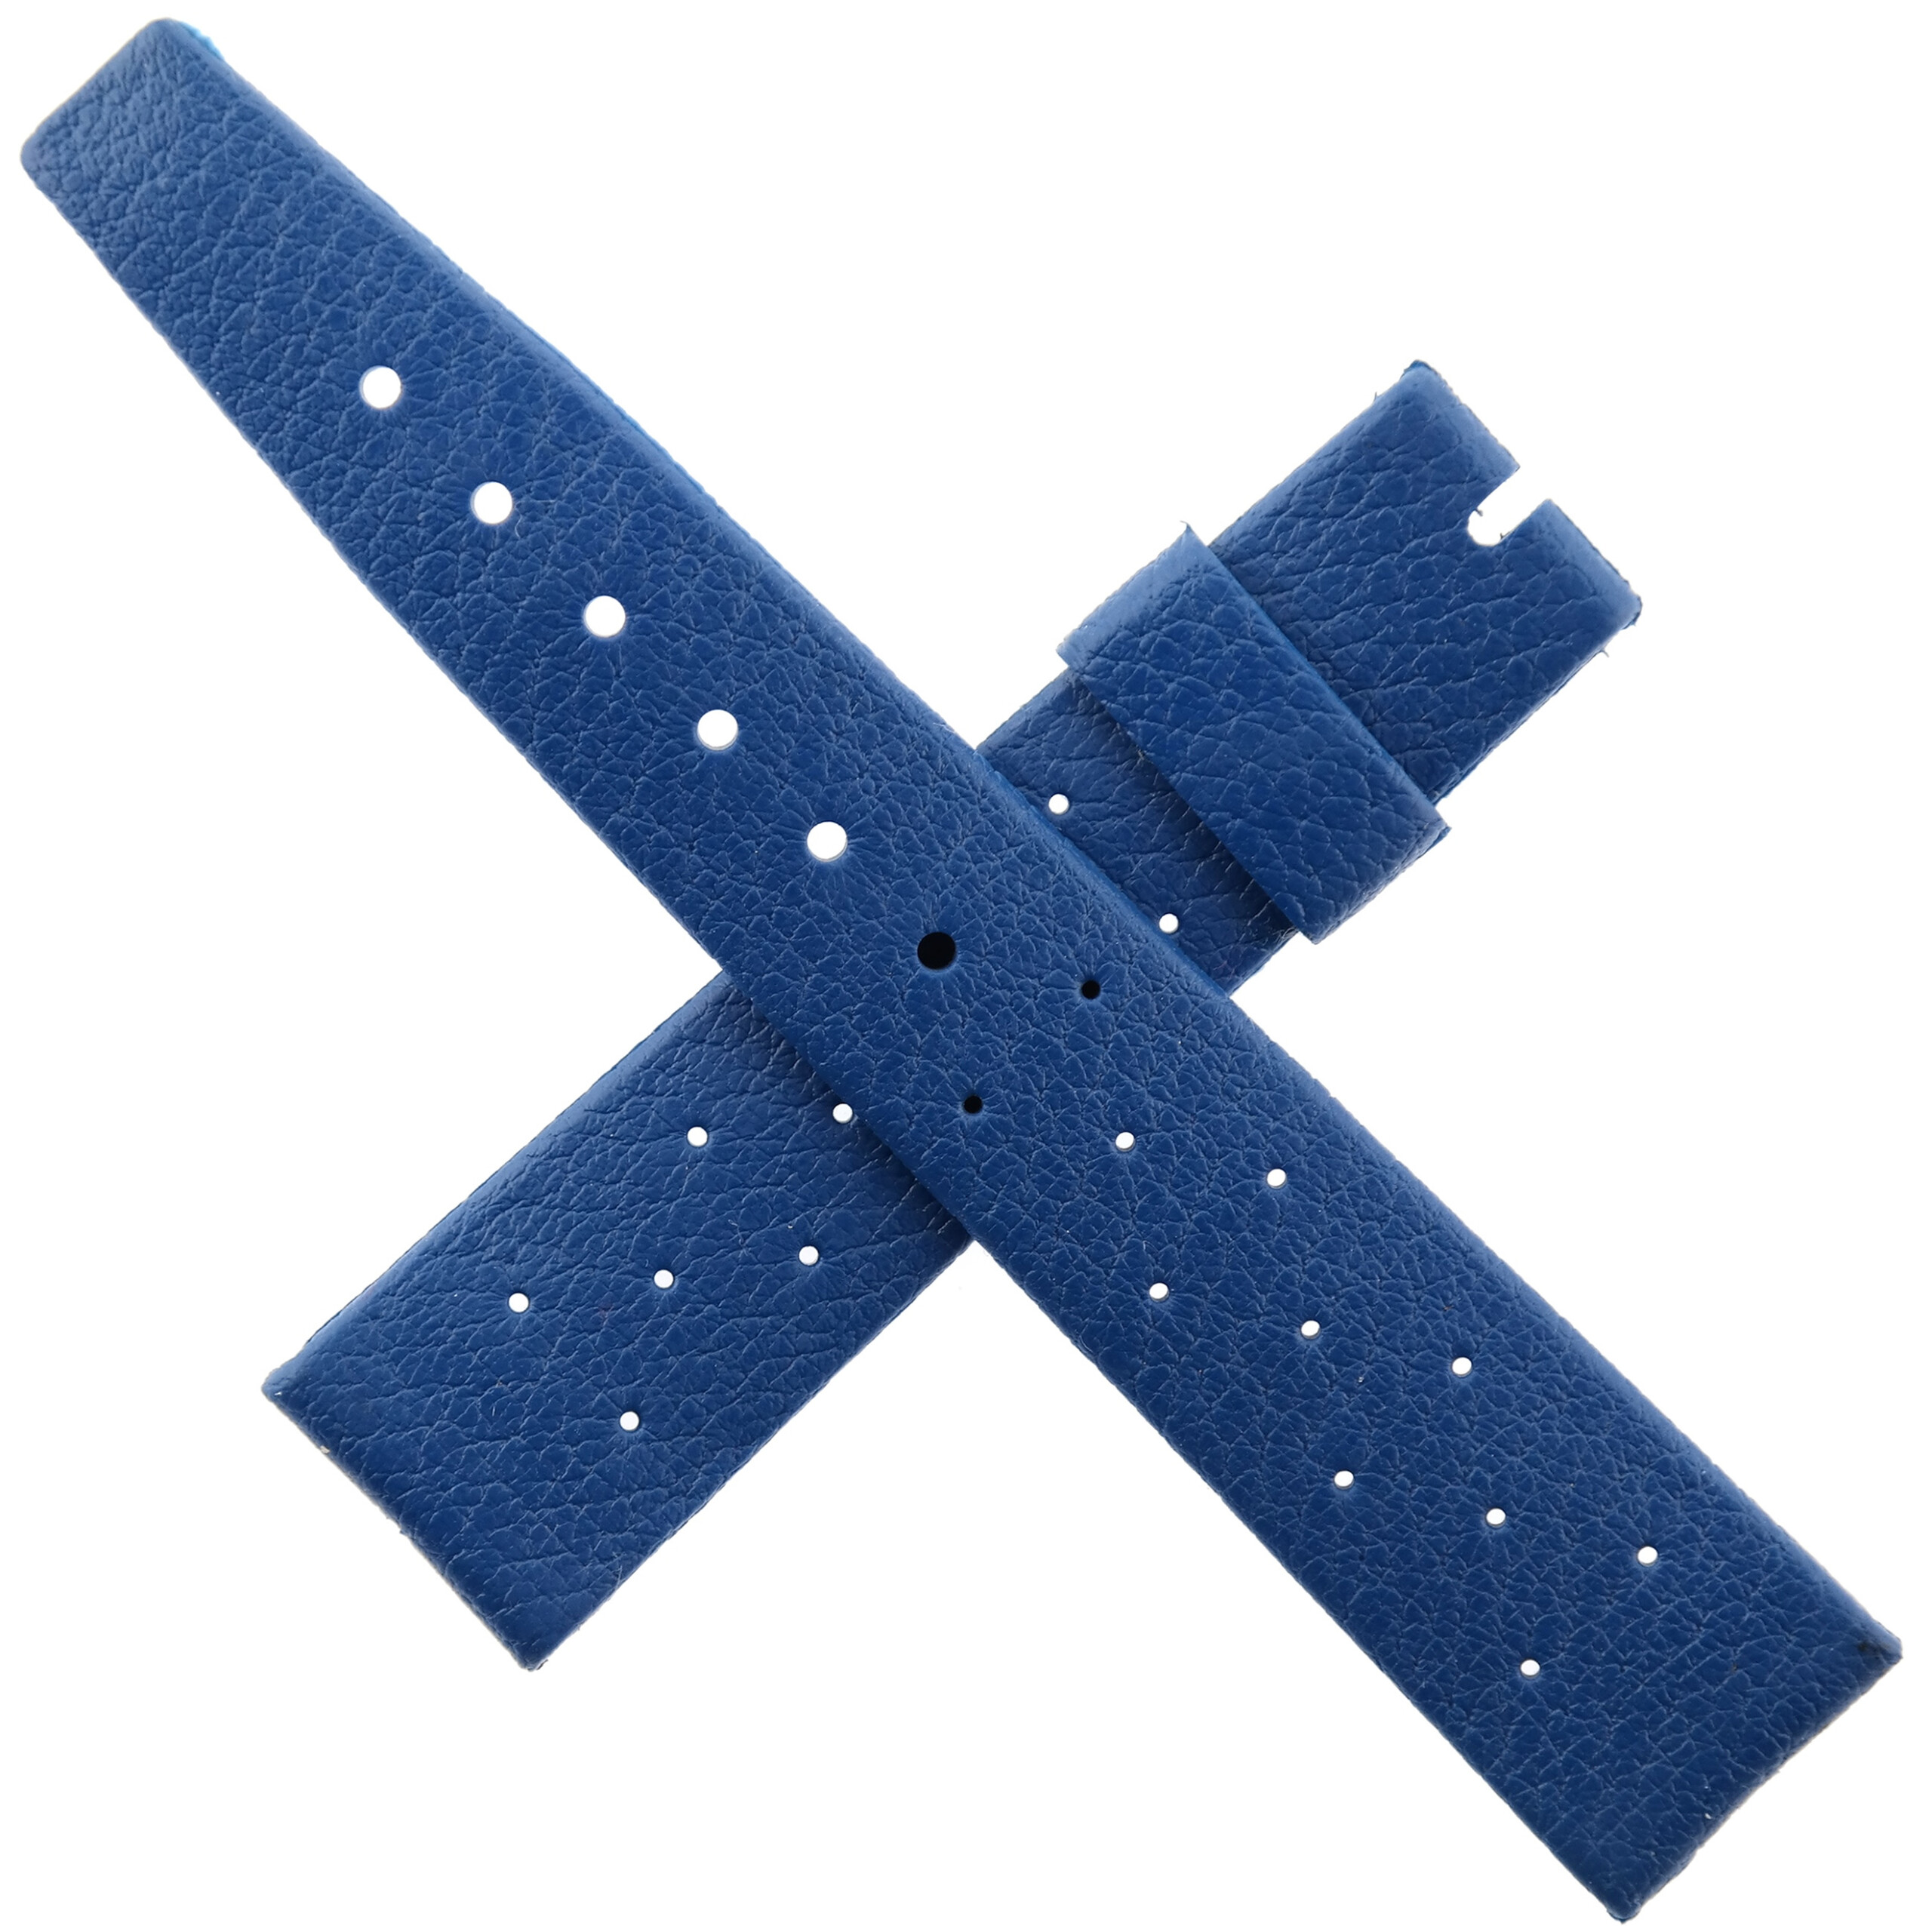 Vintage BESTFIT TROPIC STAR Watch Strap - 23219 - 19 mm - Blue - Swiss Made